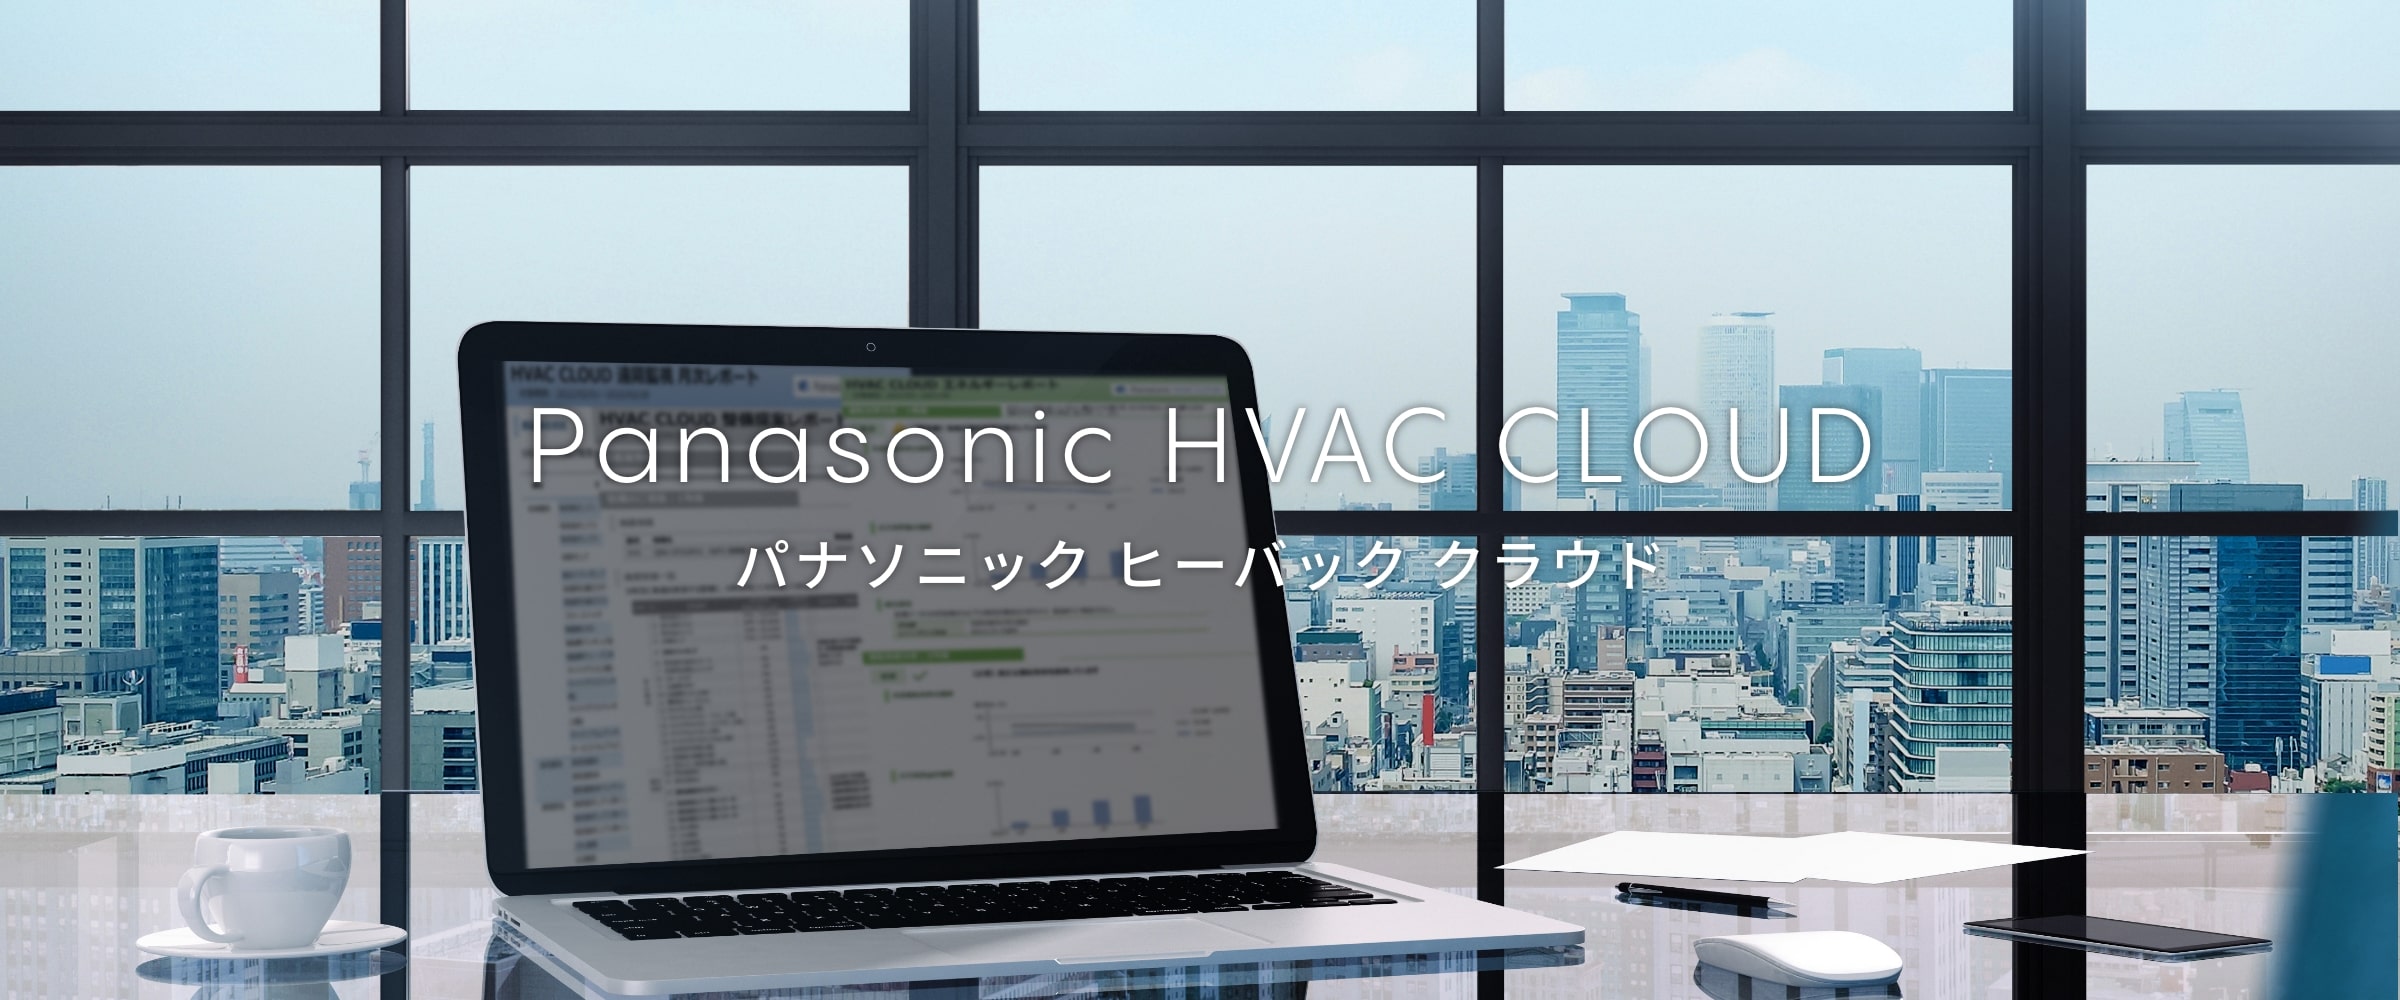 Panasonic HVAC CLOUD